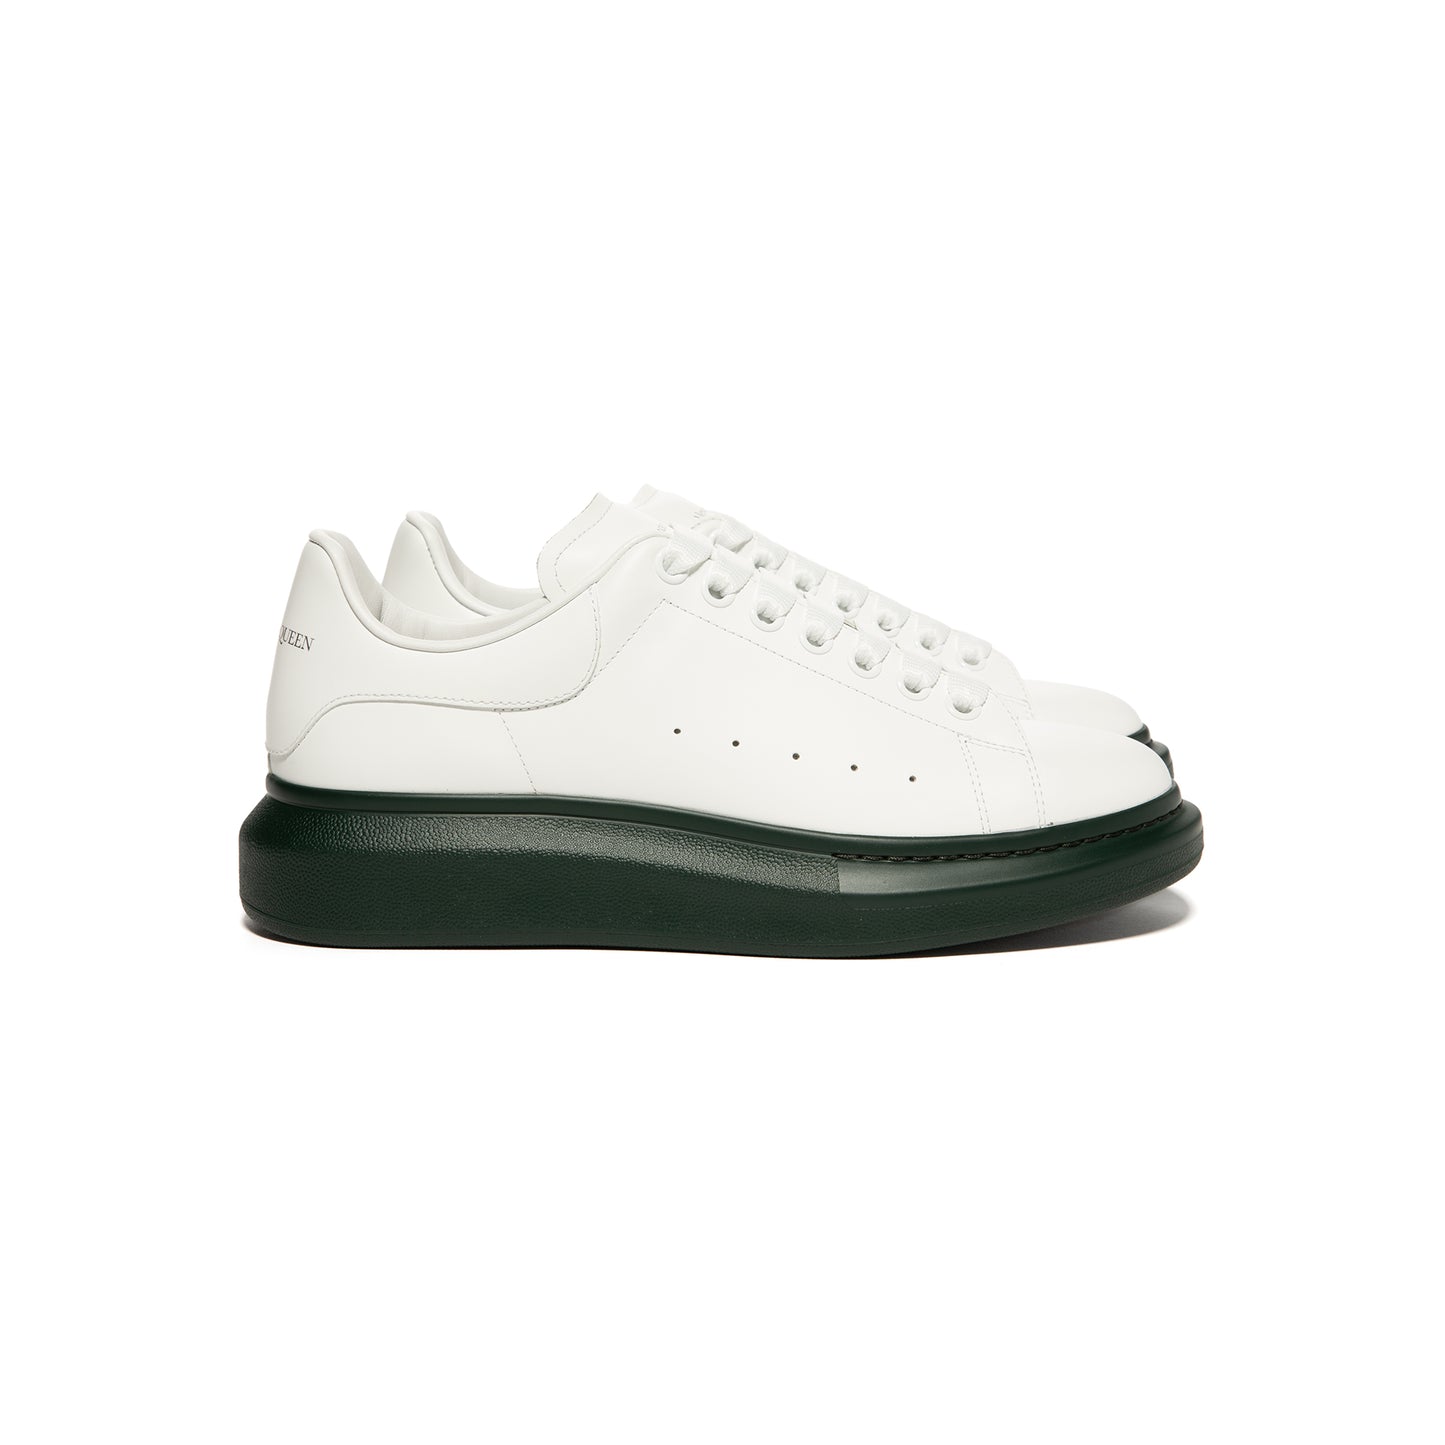 Alexander McQueen Oversized Sneaker (White/Dark Forest Green)